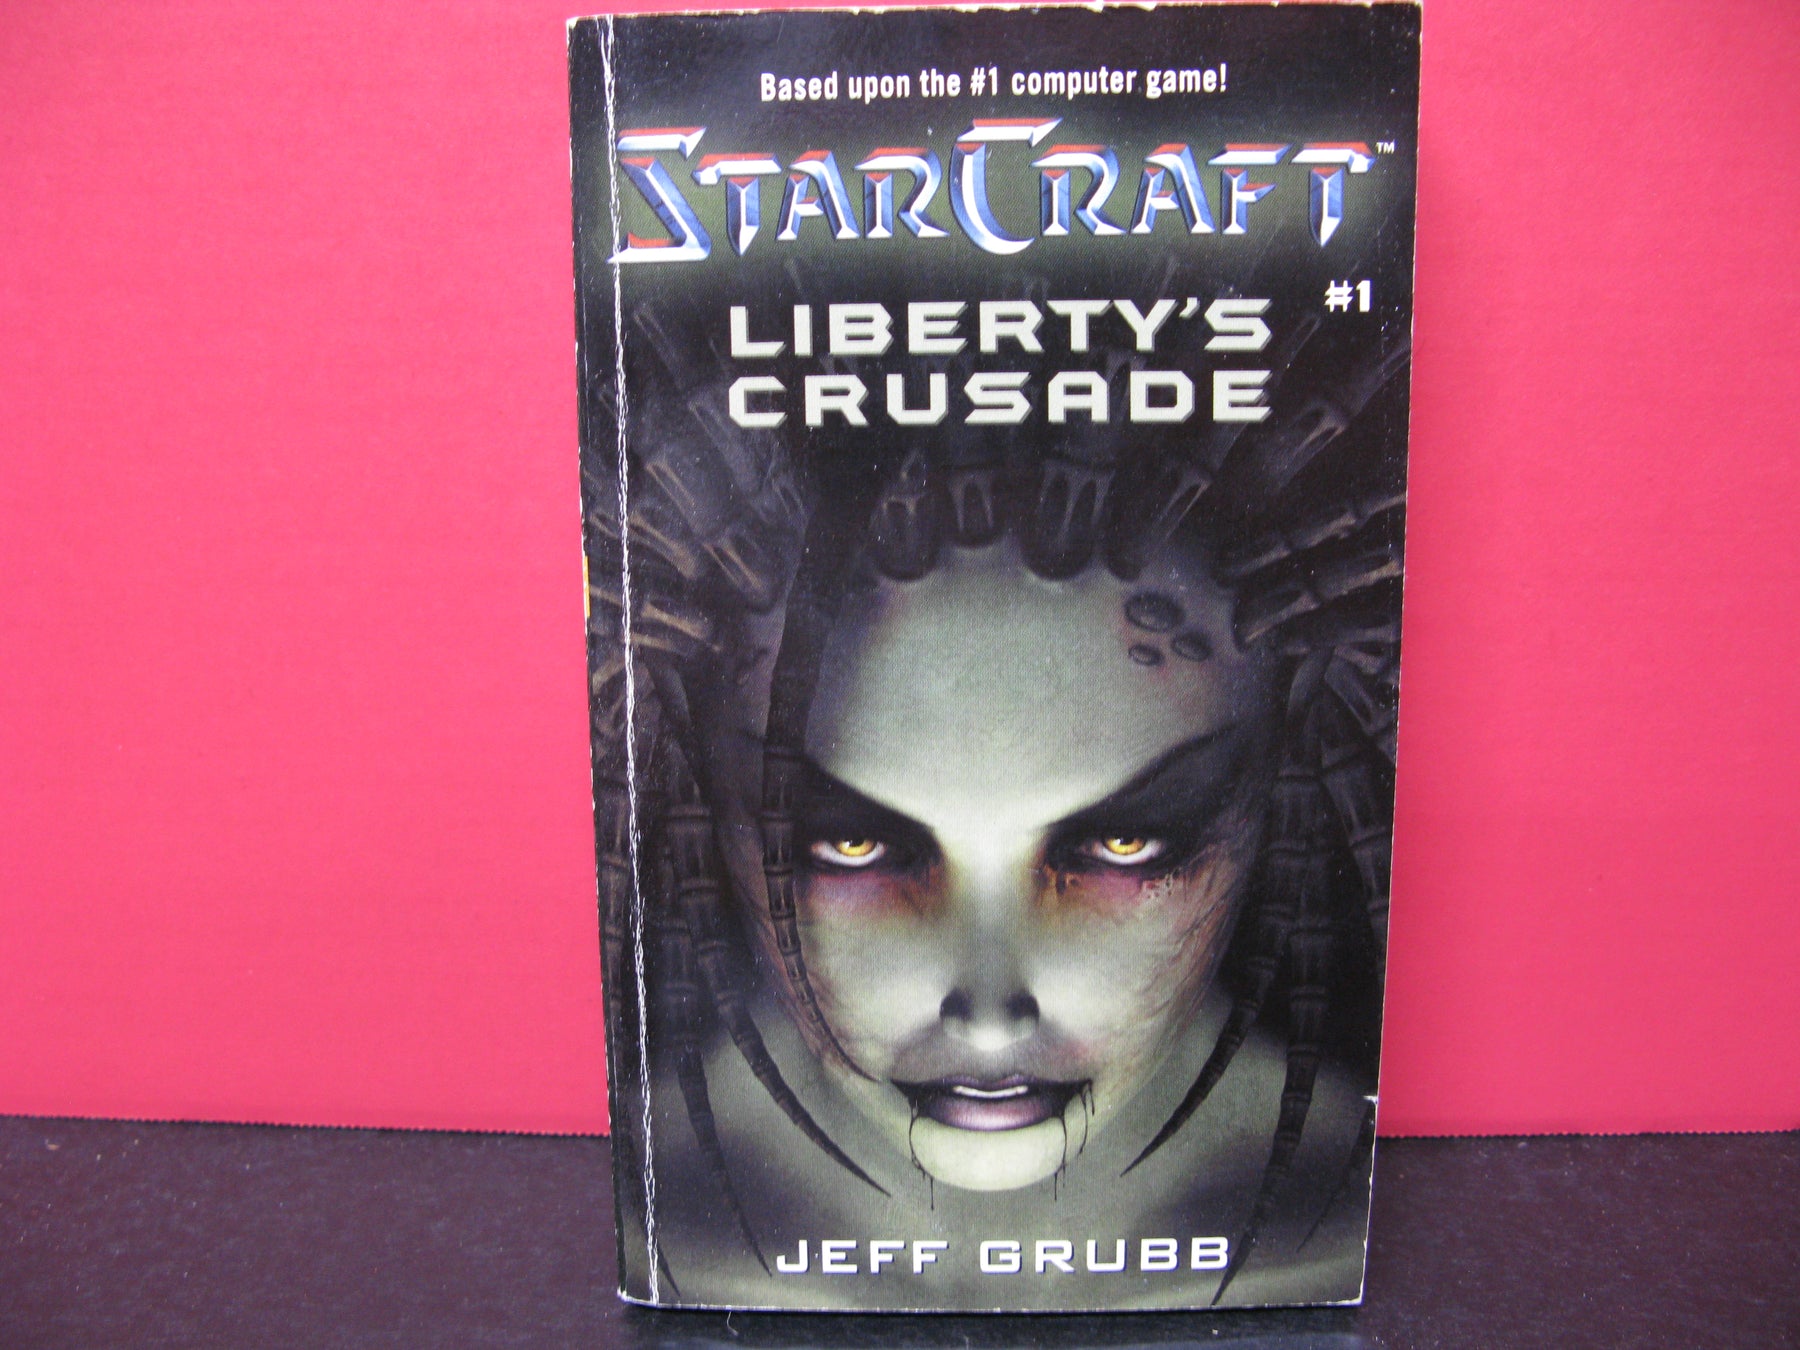 StarCraft Liberty's Crusade #1 Book by Jeff Grubb